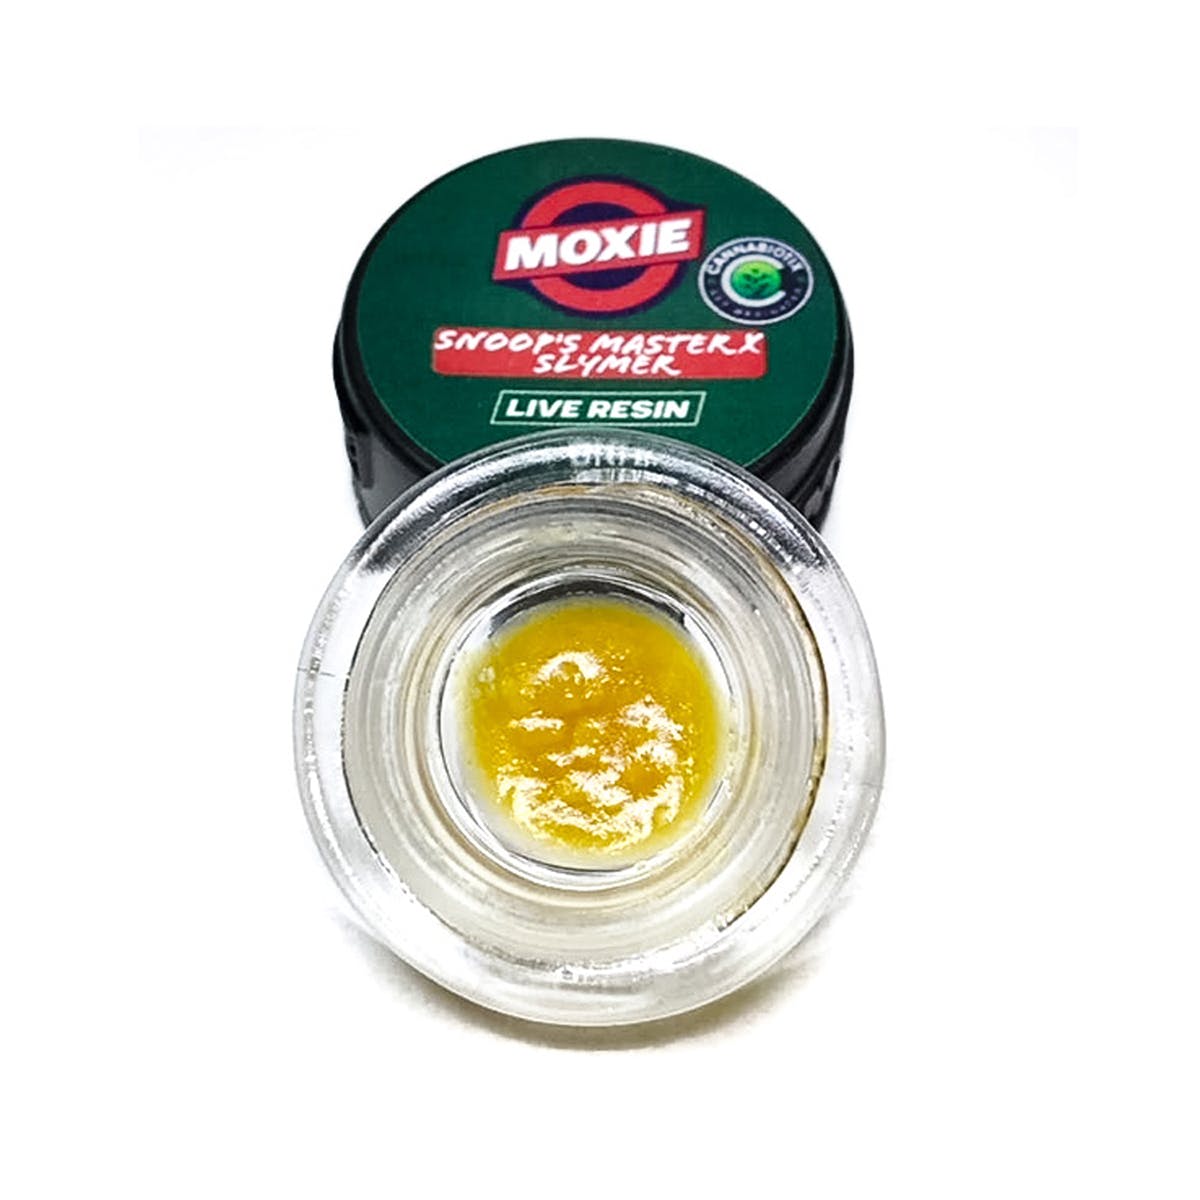 wax-moxie-snoops-master-slymer-live-resin-sauce